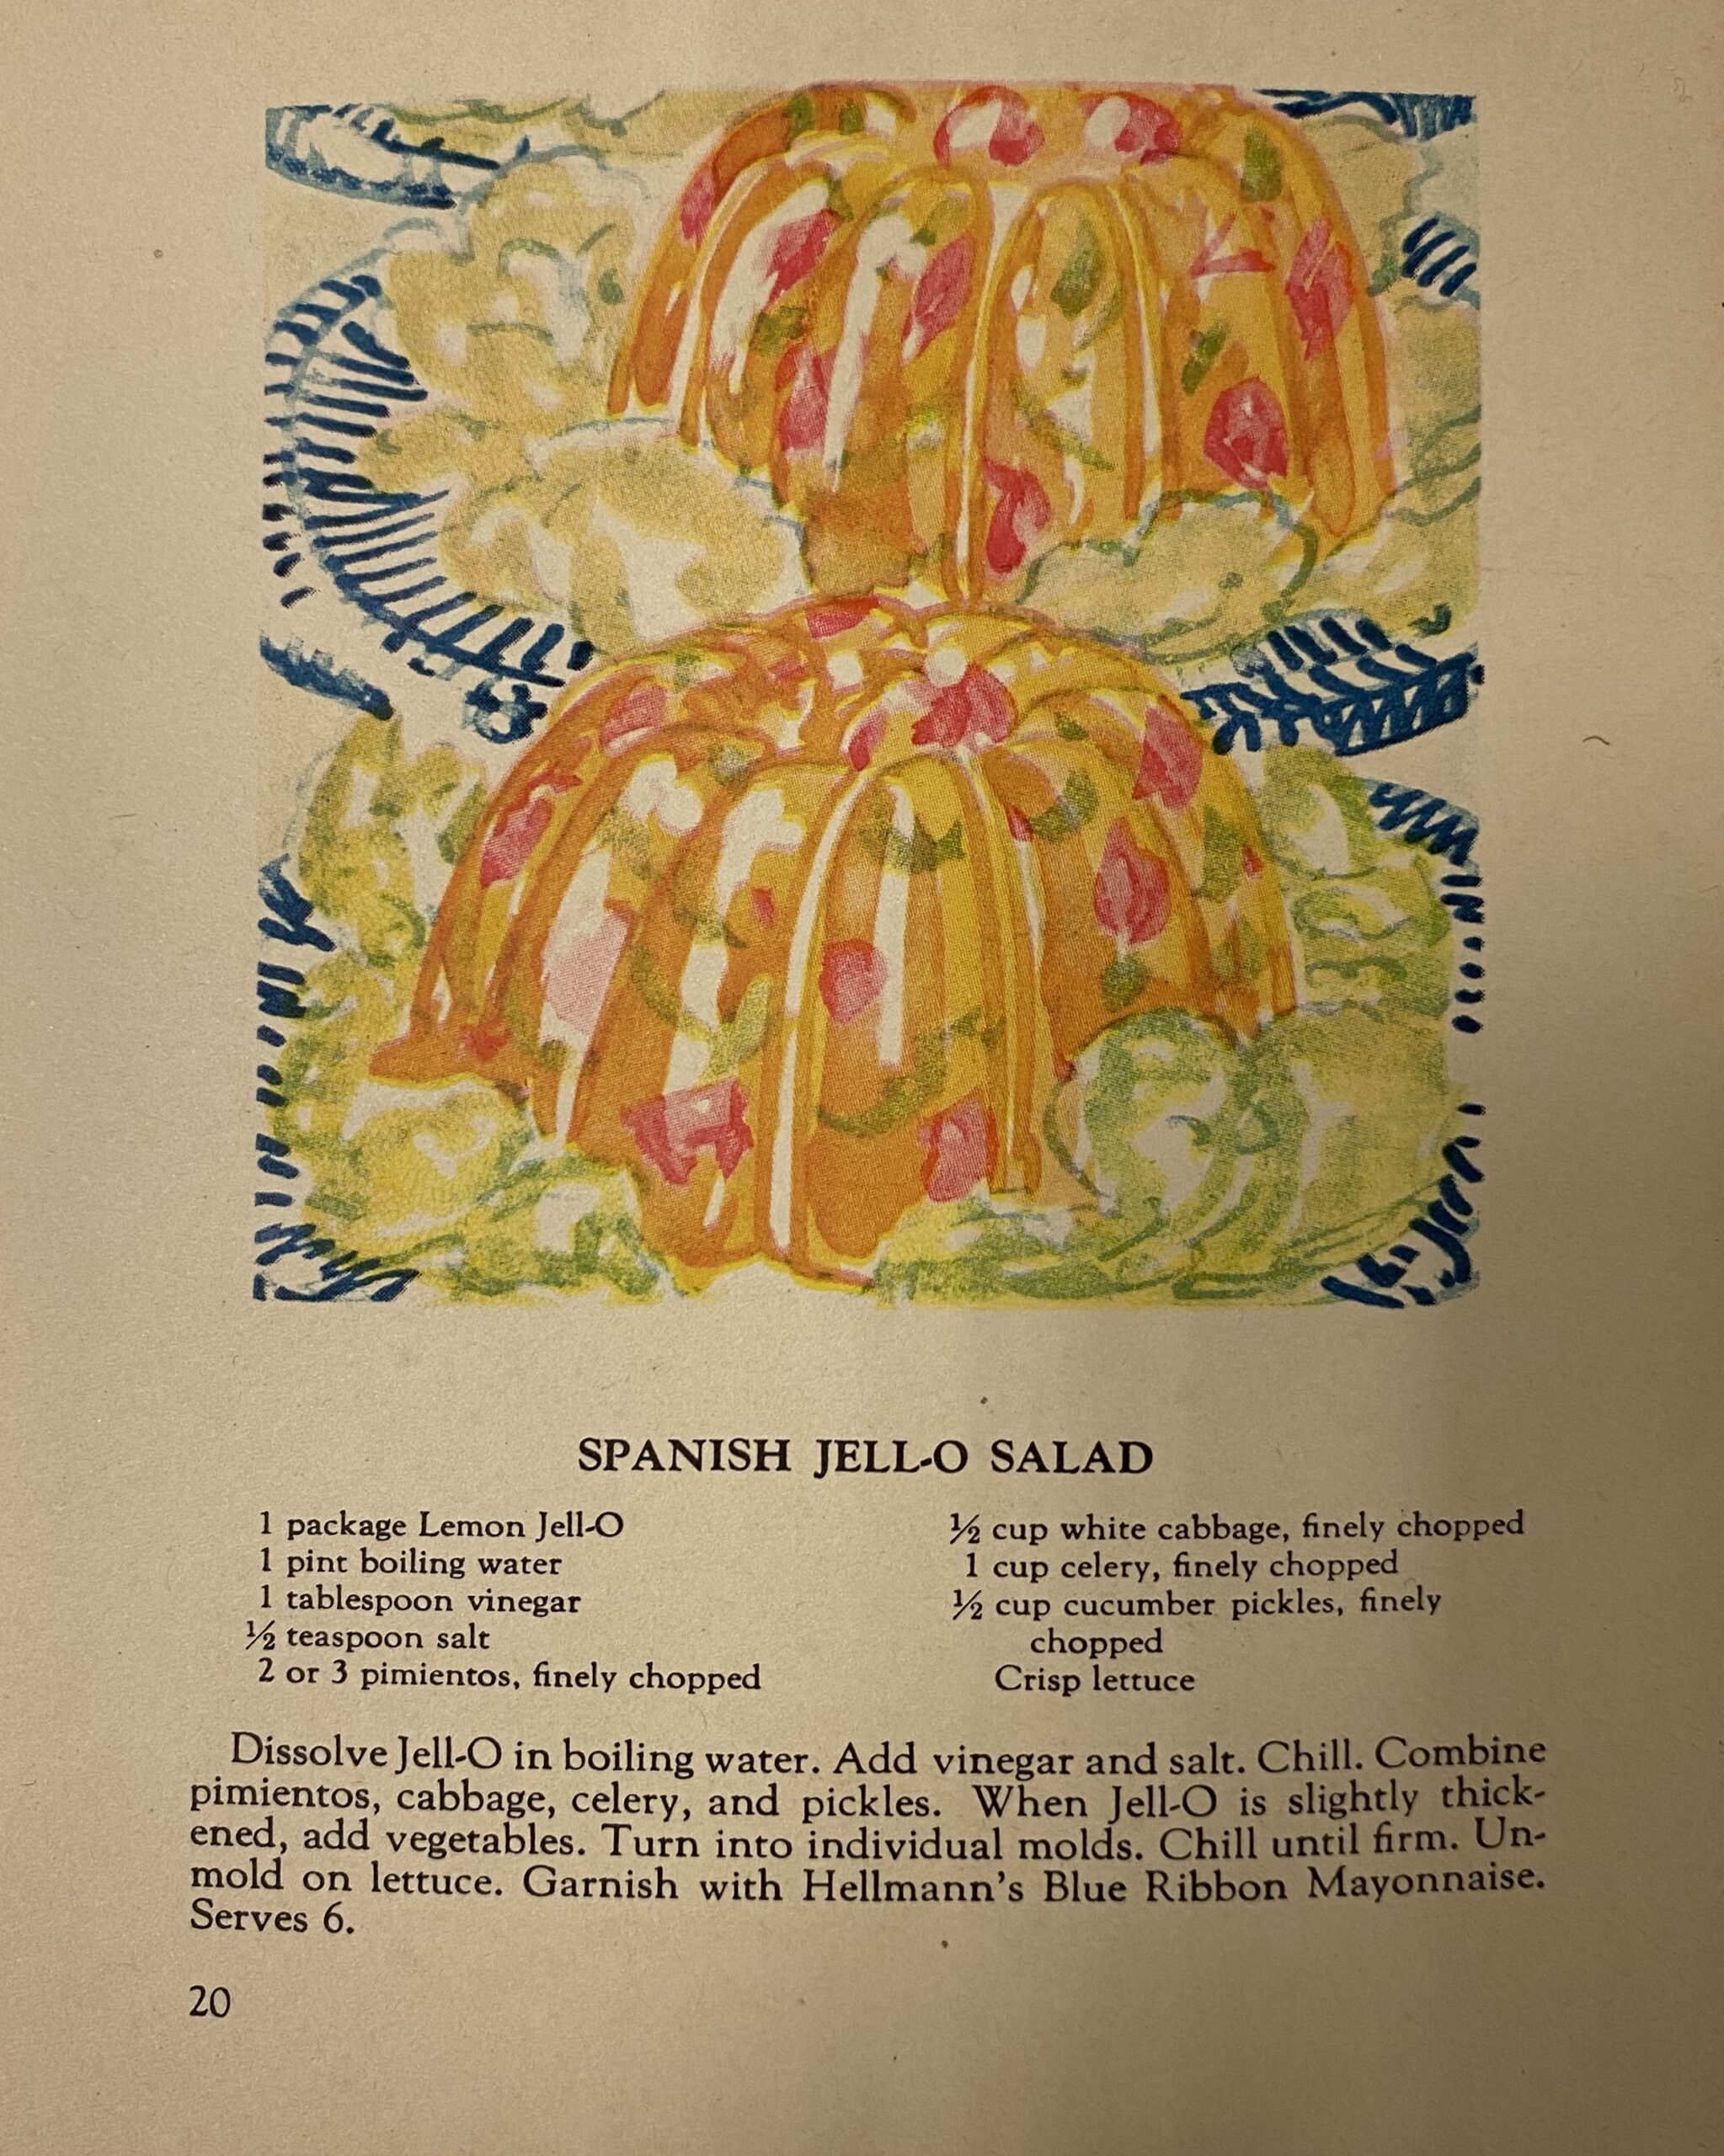 Orange Jell-O salad illustration with recipe